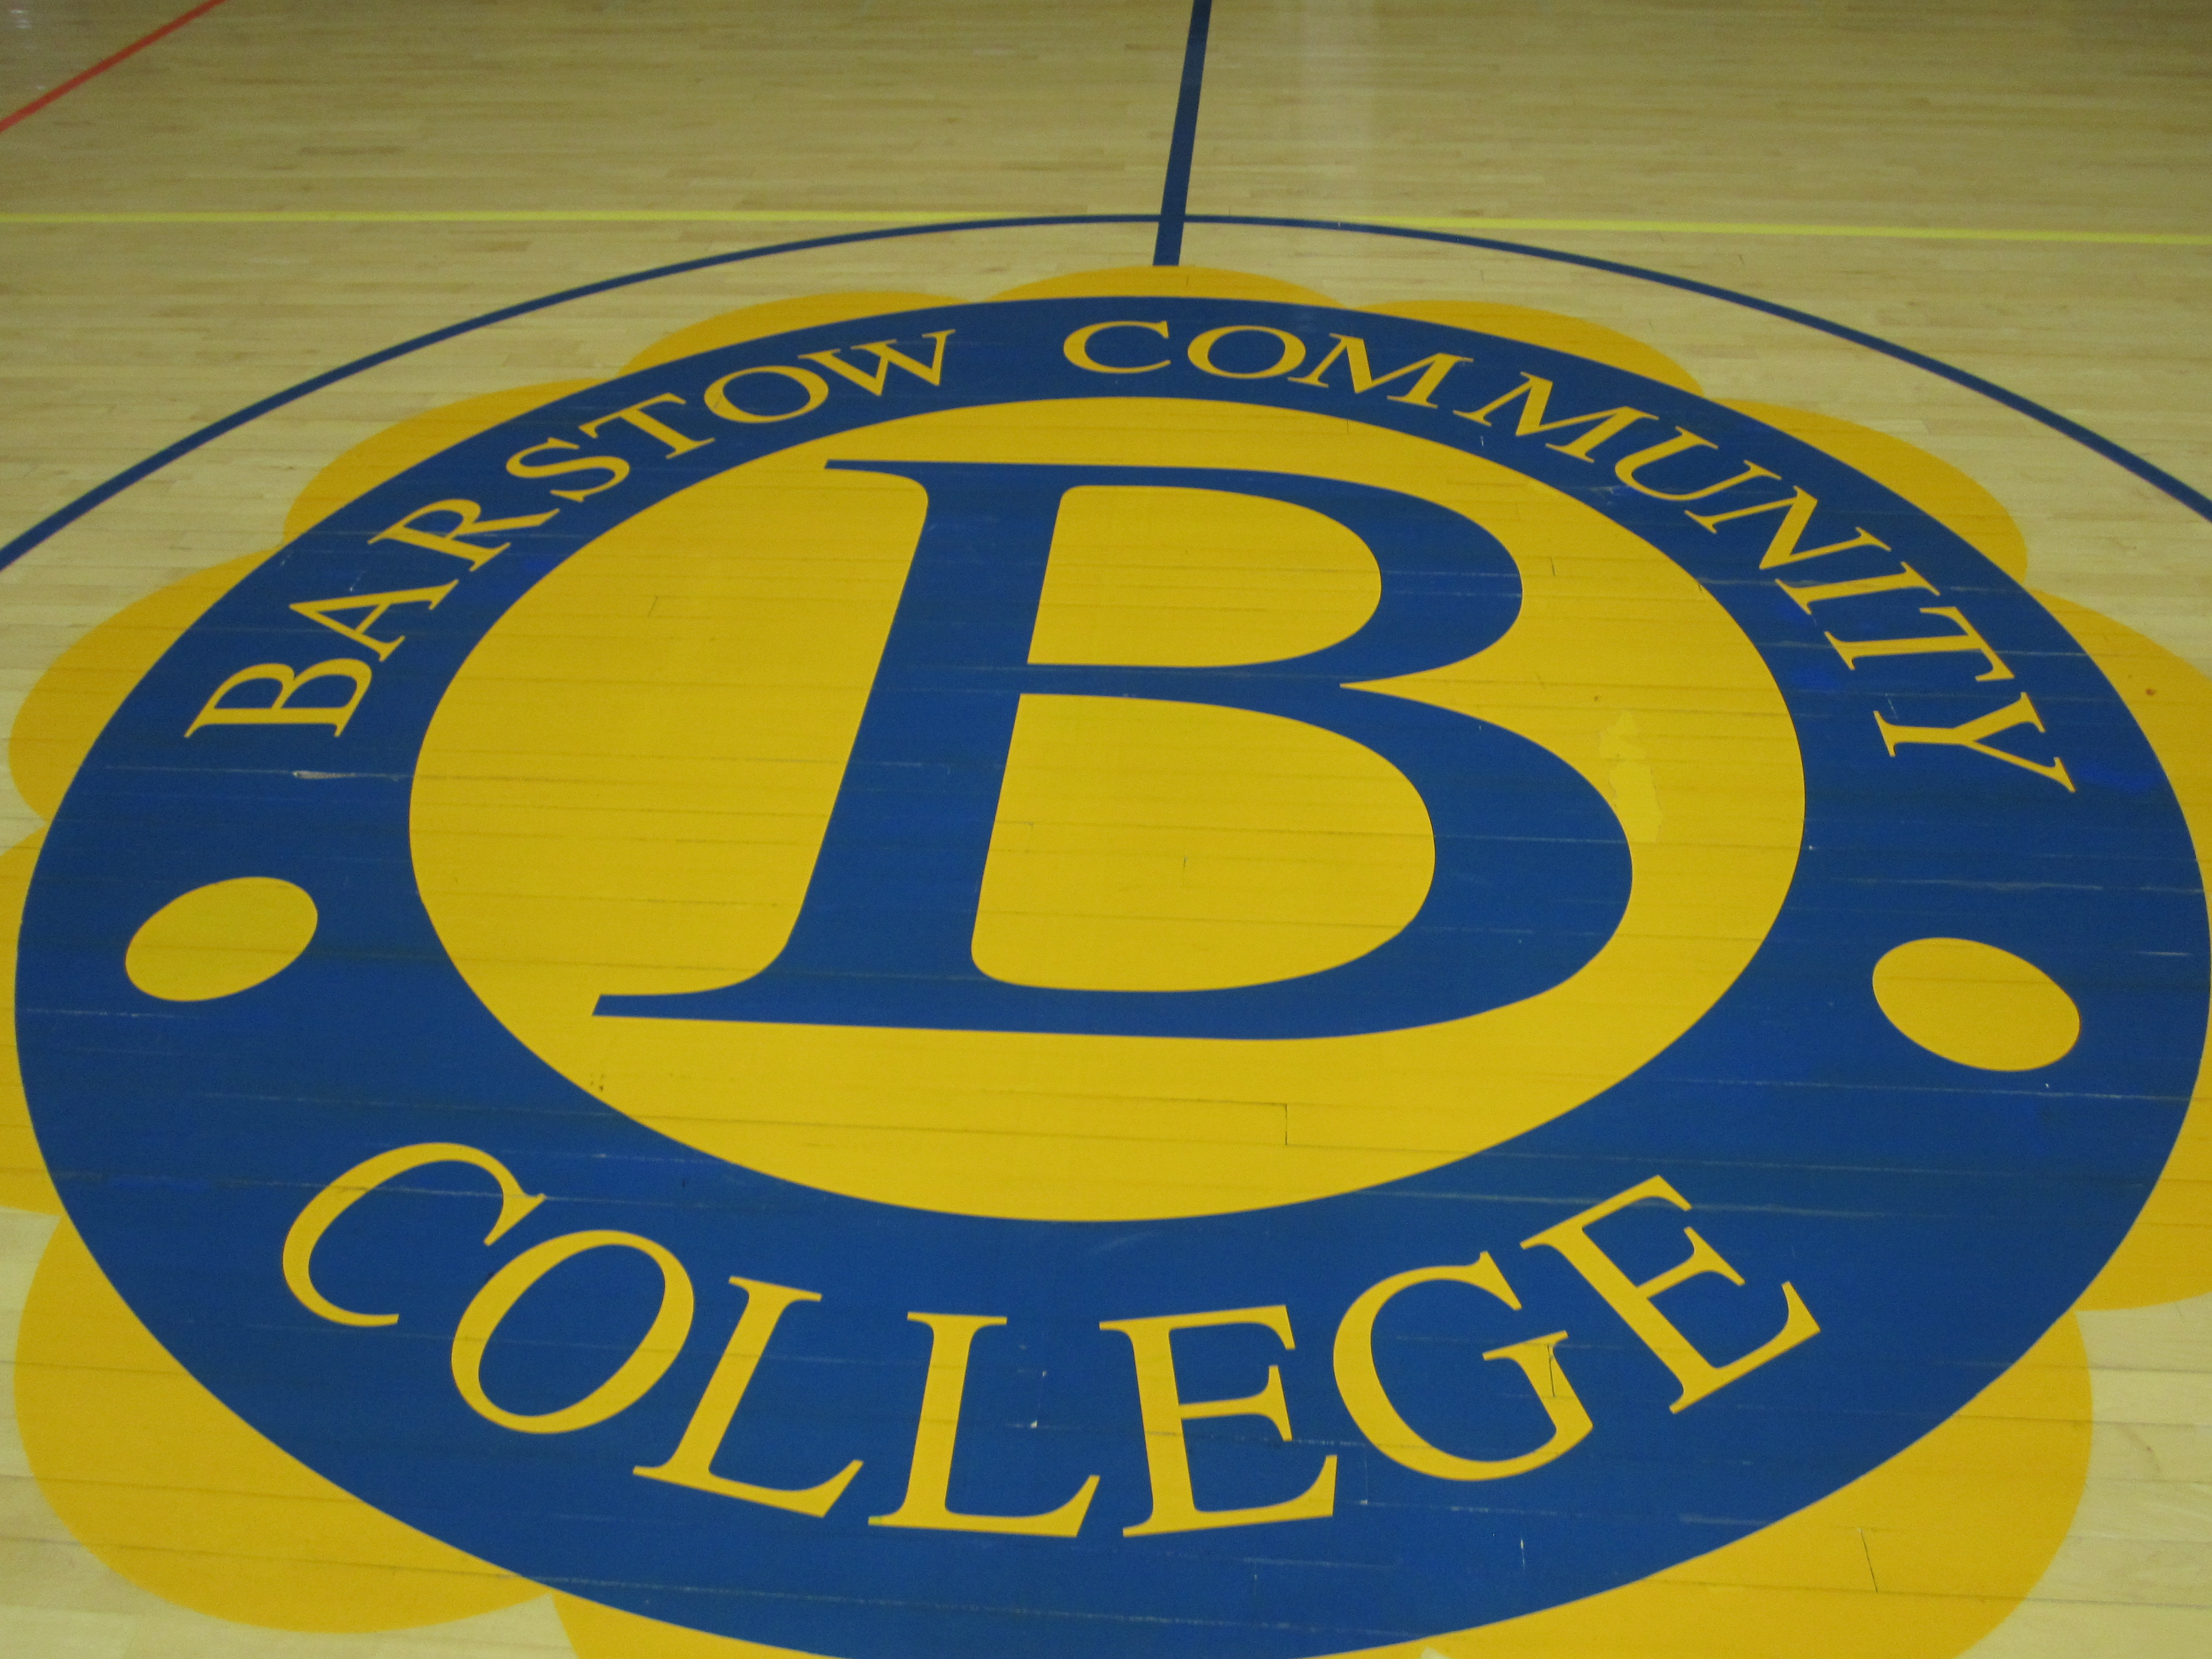 Barstow Community College 28